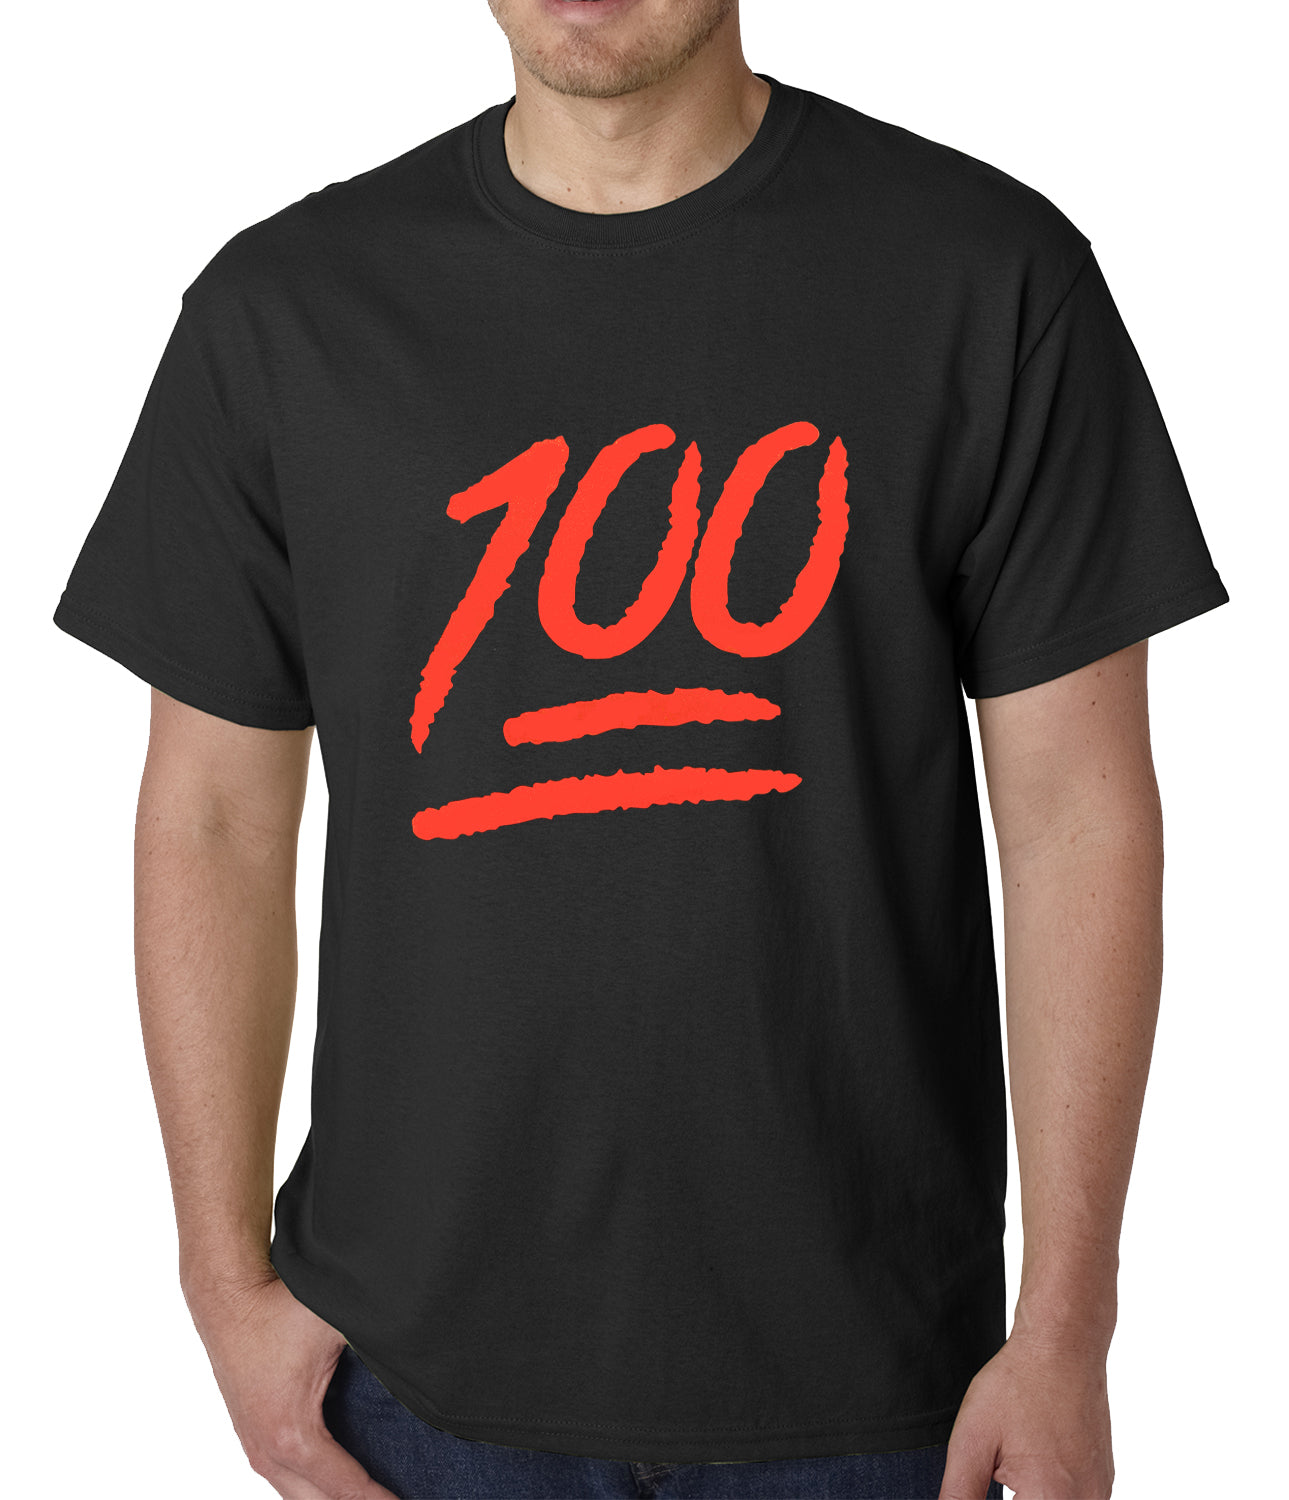 Keep It 100 Mens T-shirt